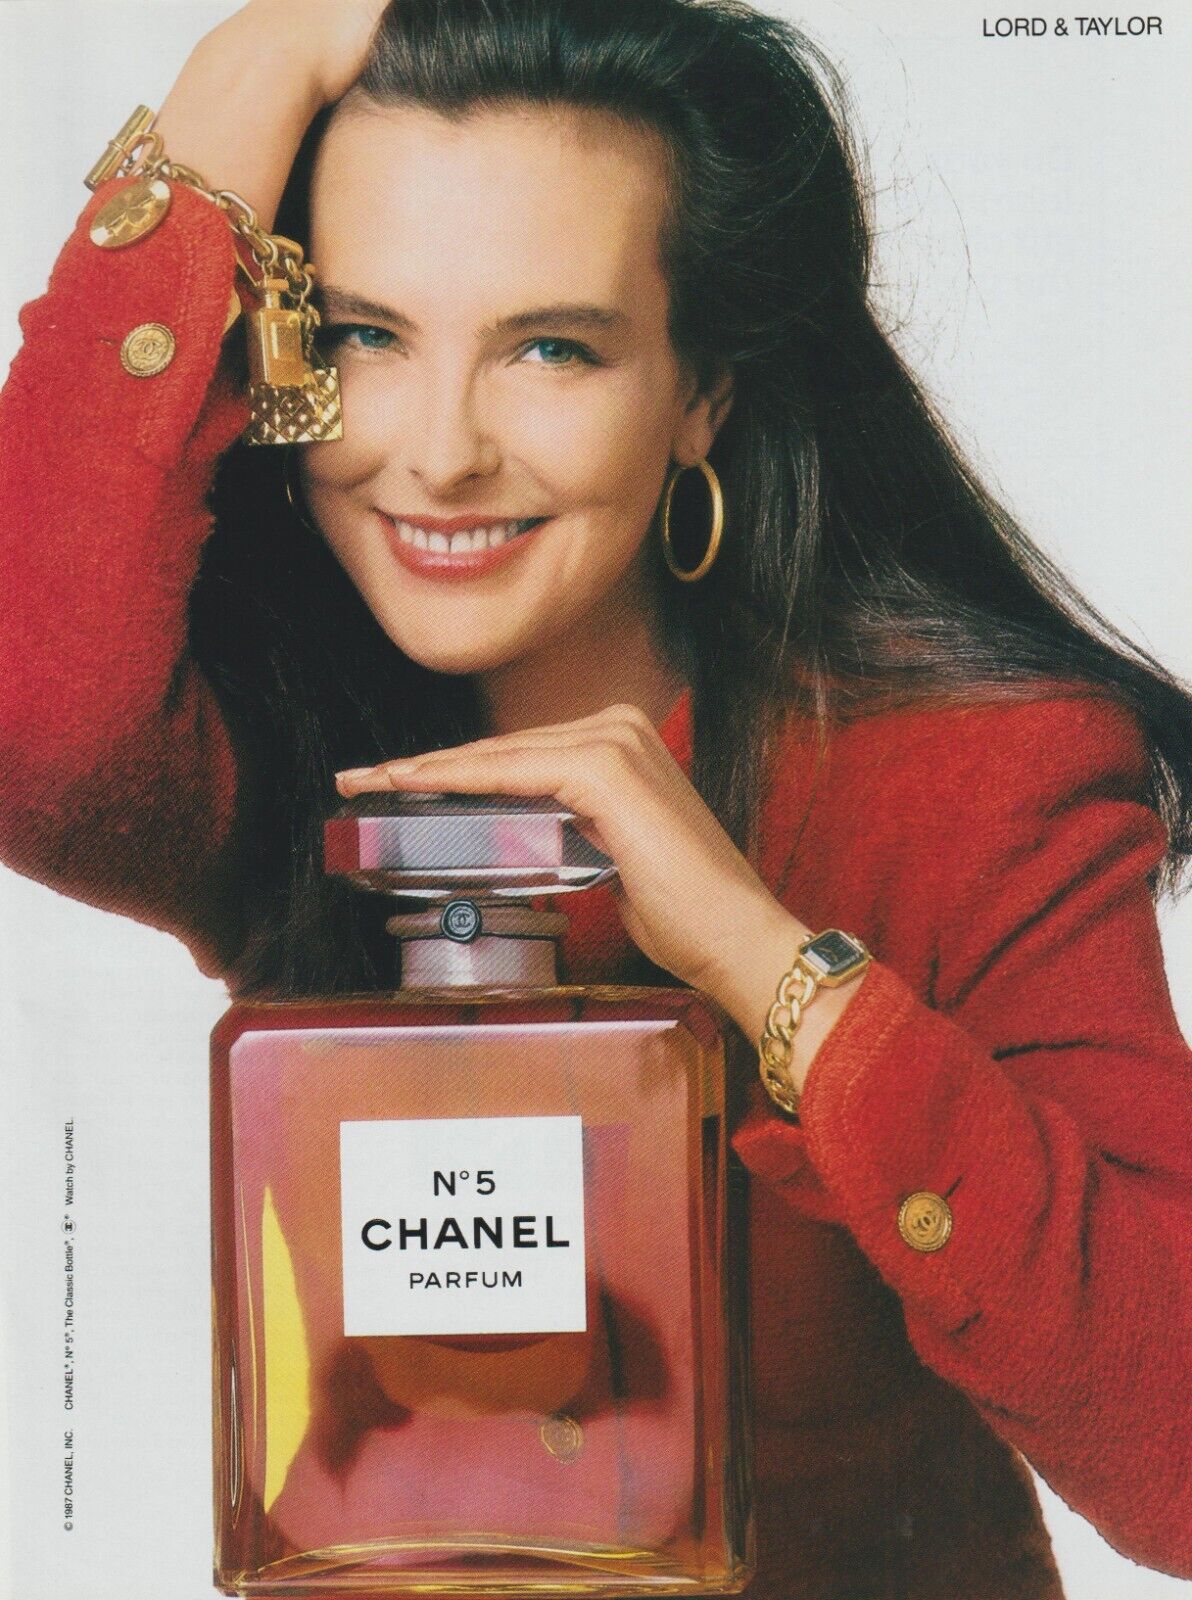 1987 Chanel No5 Parfum Perfume - Actress Model Carole Bouquet - Print Ad Photo